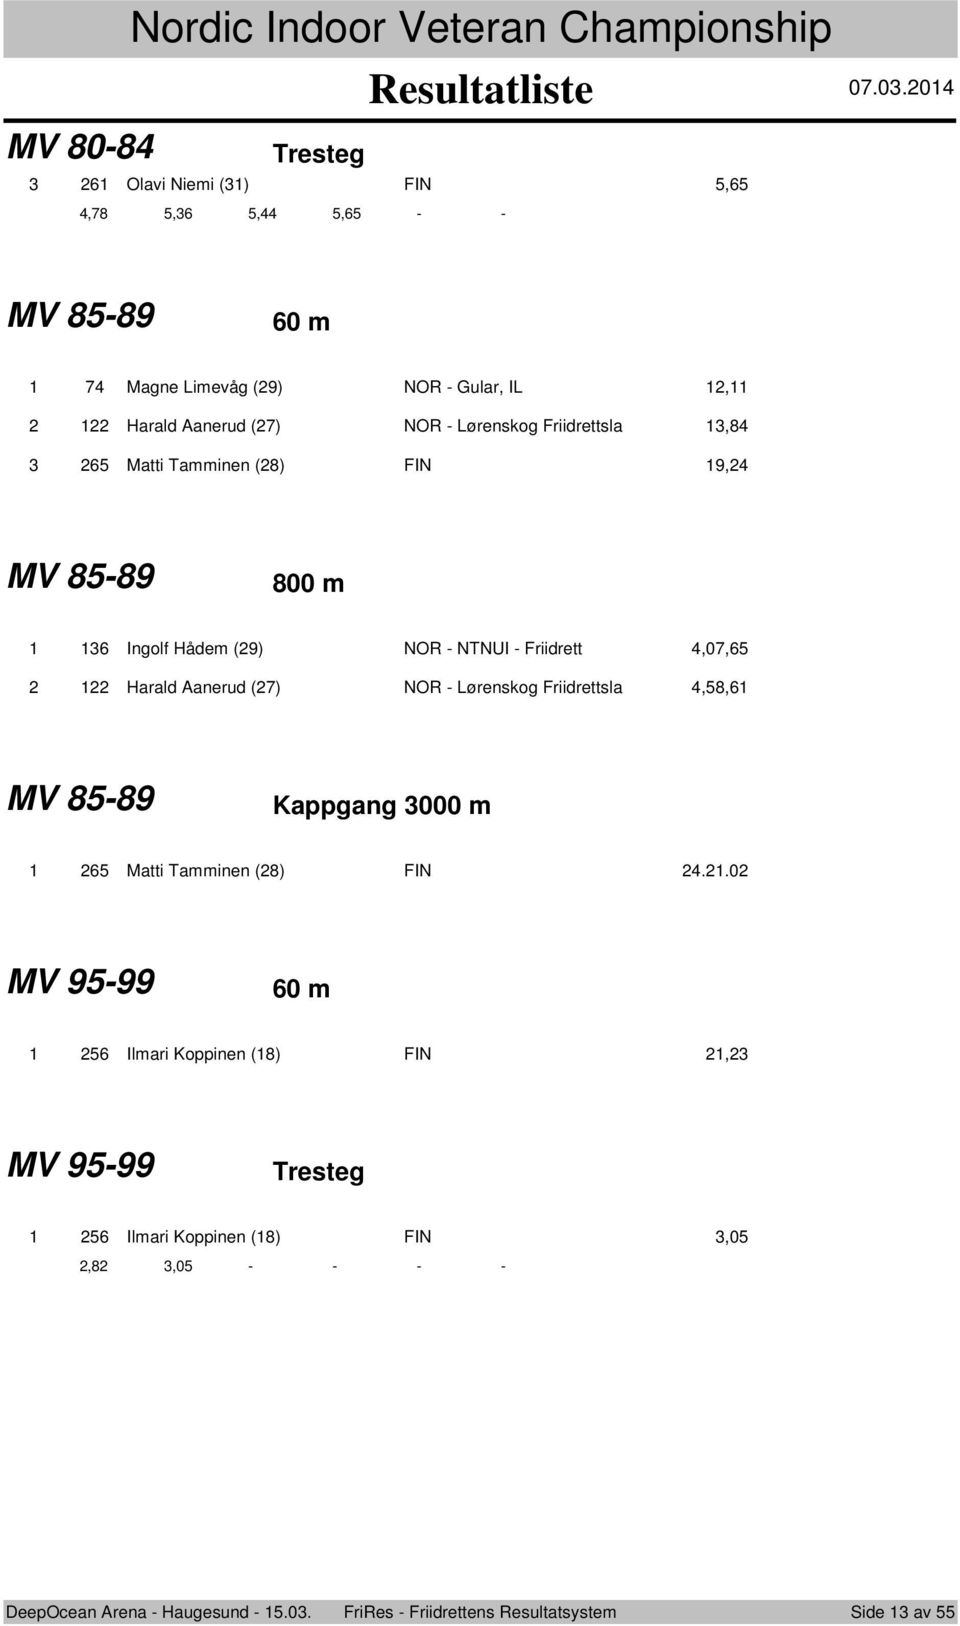 .0.0 Tresteg 6 Olavi Niemi () FIN,6,78,6,,6 - - MV 8-89 60 m 7 Magne Limevåg (9) NOR - Gular, IL, Harald Aanerud (7) NOR - Lørenskg